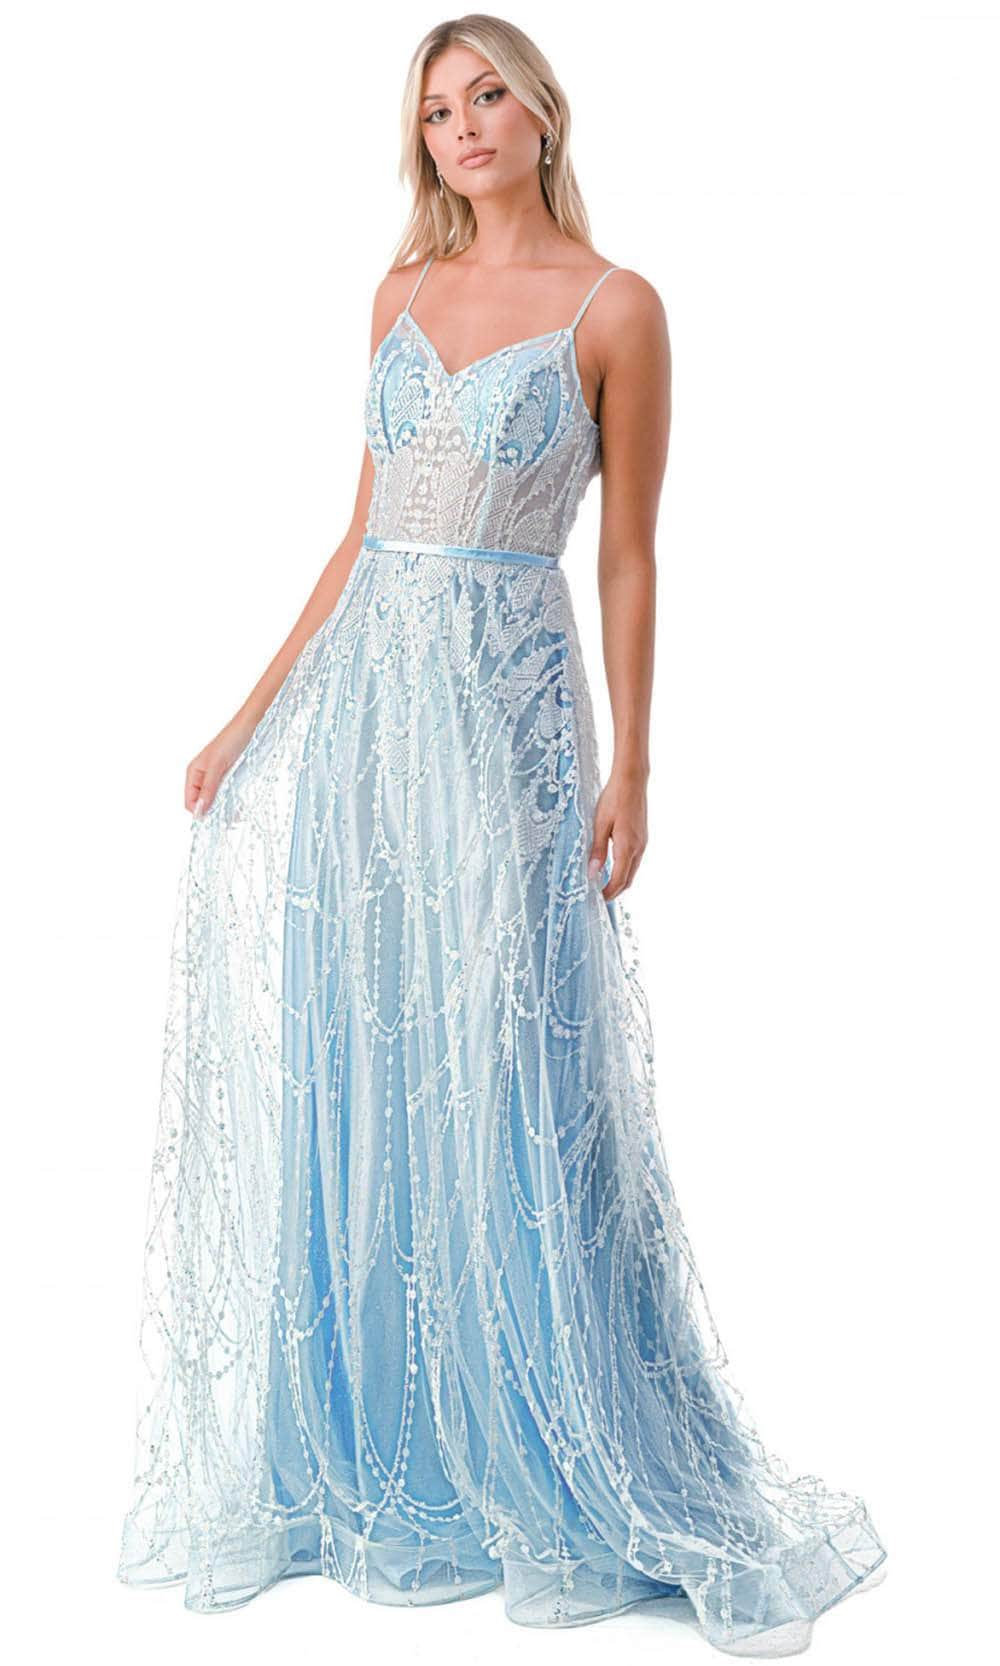 Aspeed Design L2775B - Embroidered Sleeveless Prom Dress
